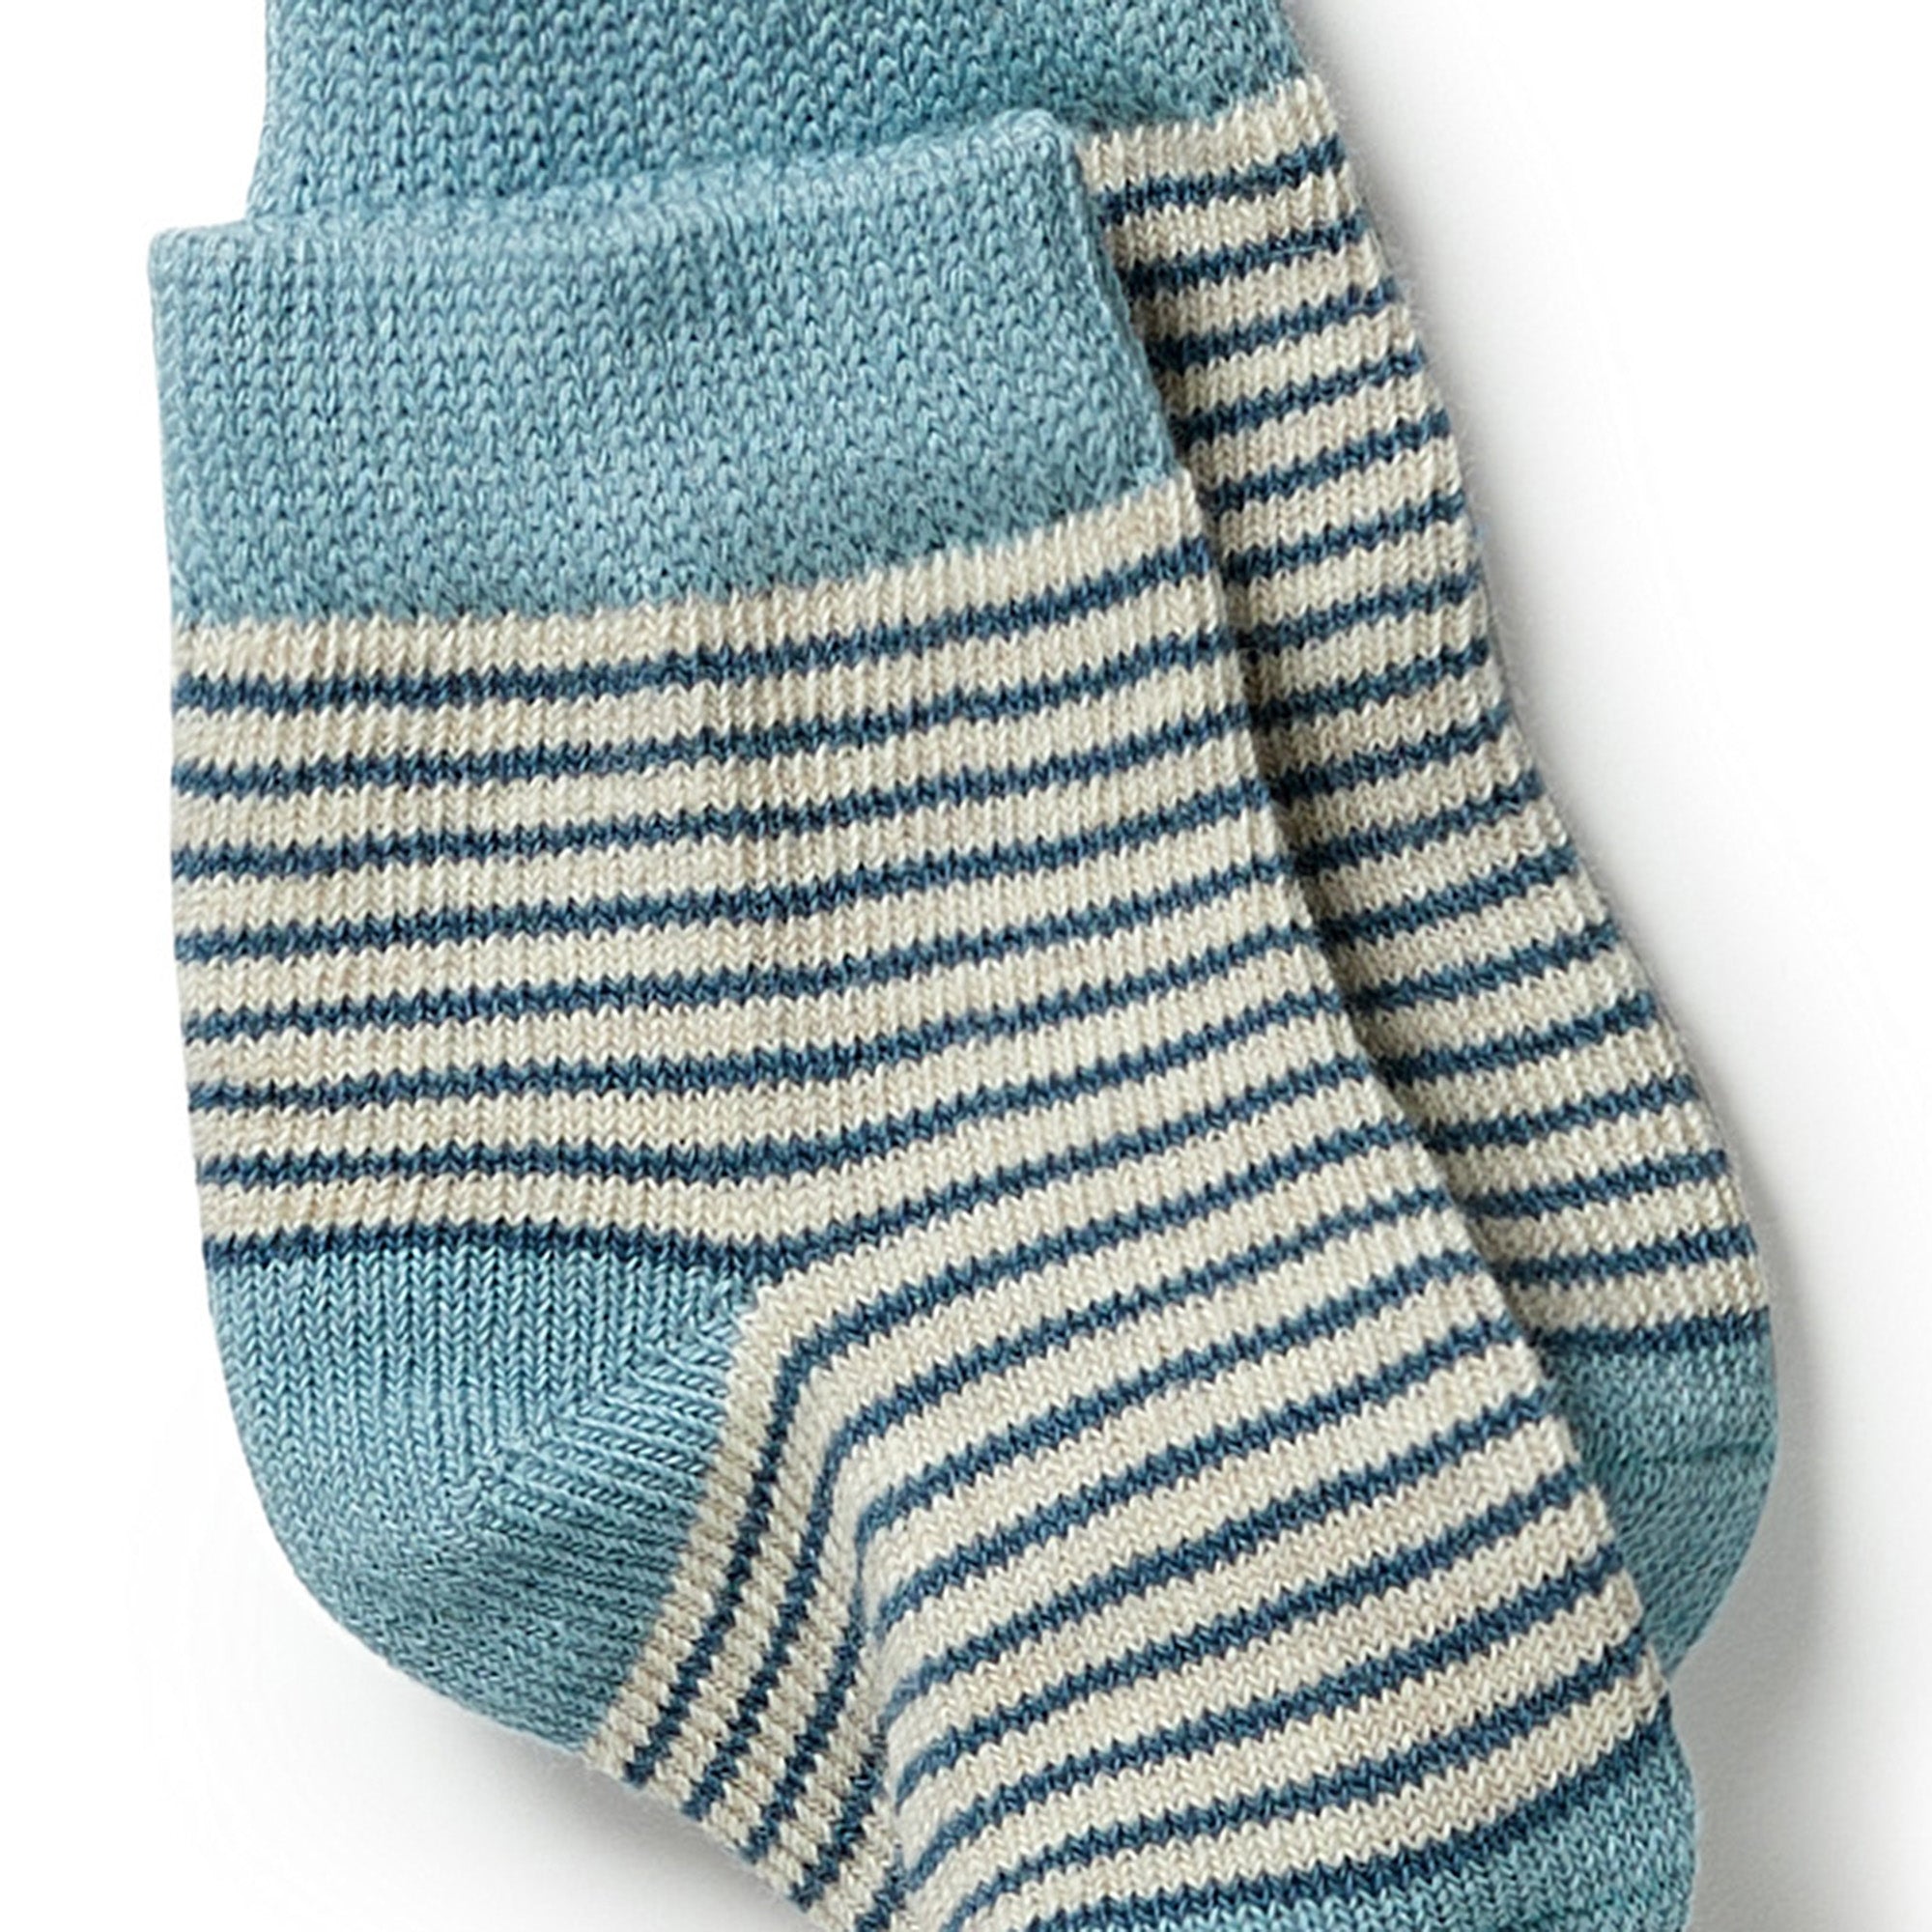 Wilson & Frenchy - Organic 3 Pack Baby Socks - Bluestone/Sterling/Oatmeal